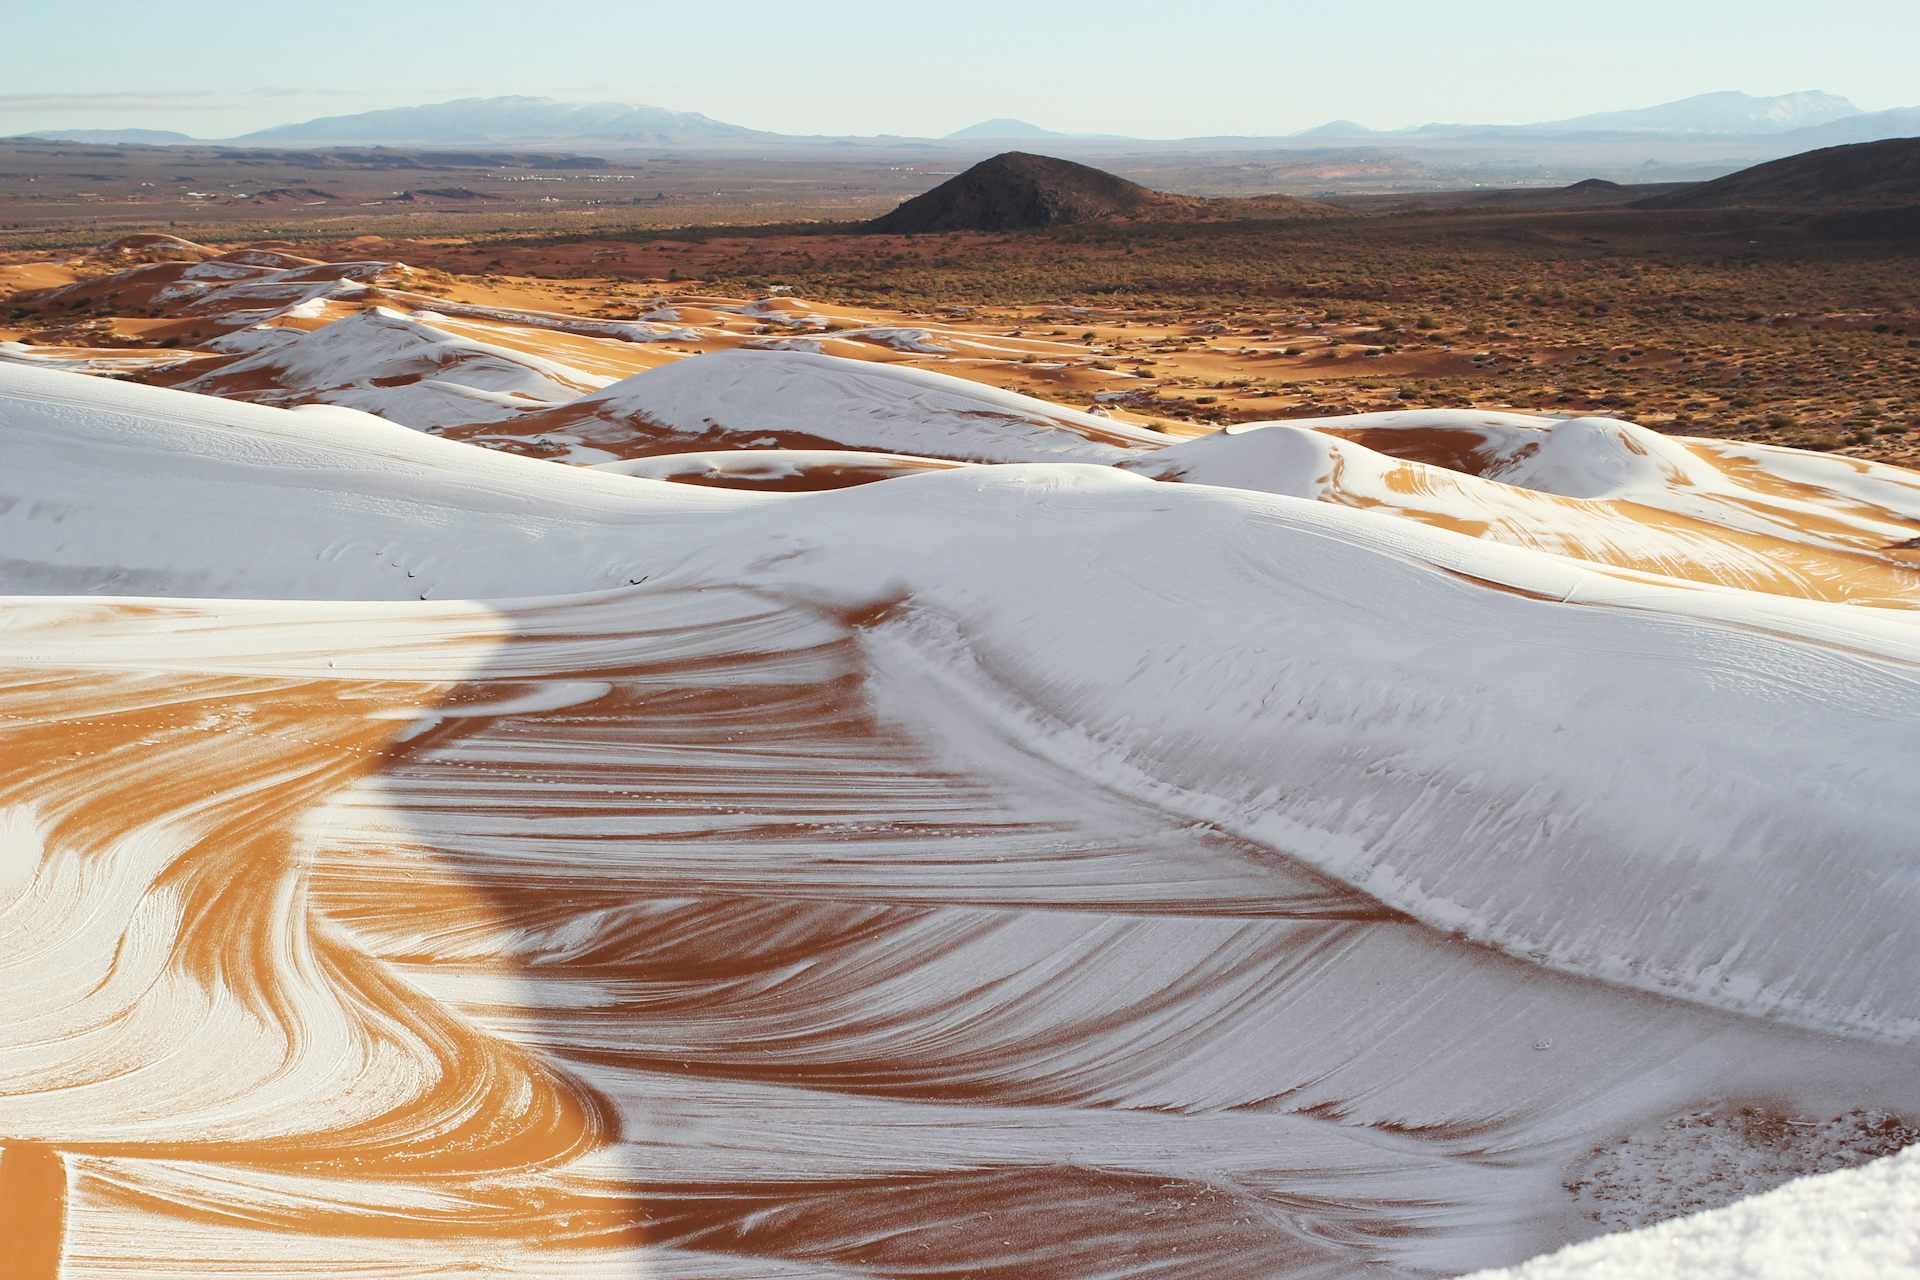 Snowfall in the Sahara Desert: an Unusual Weather Phenomenon